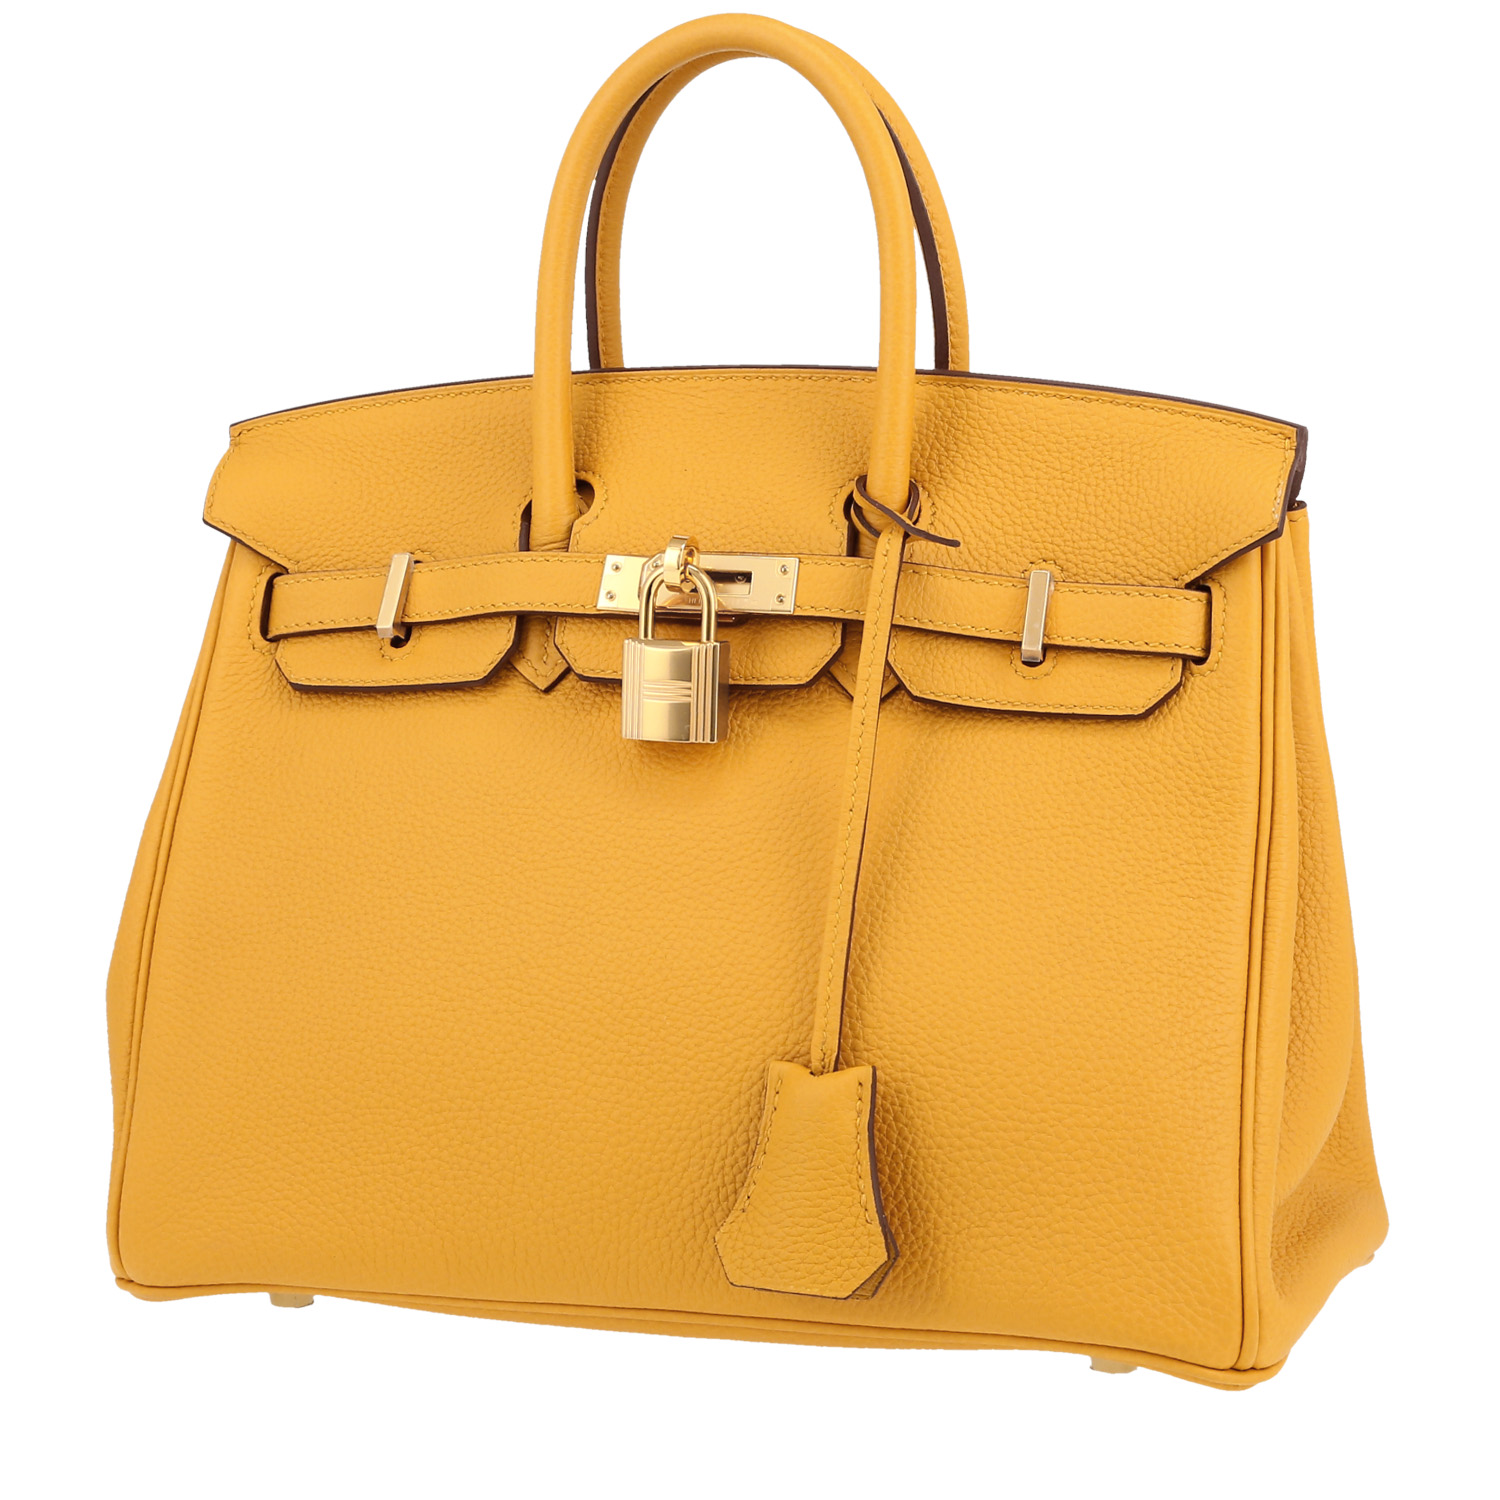 Hermès  Birkin 25 cm handbag  in yellow togo leather - 00pp